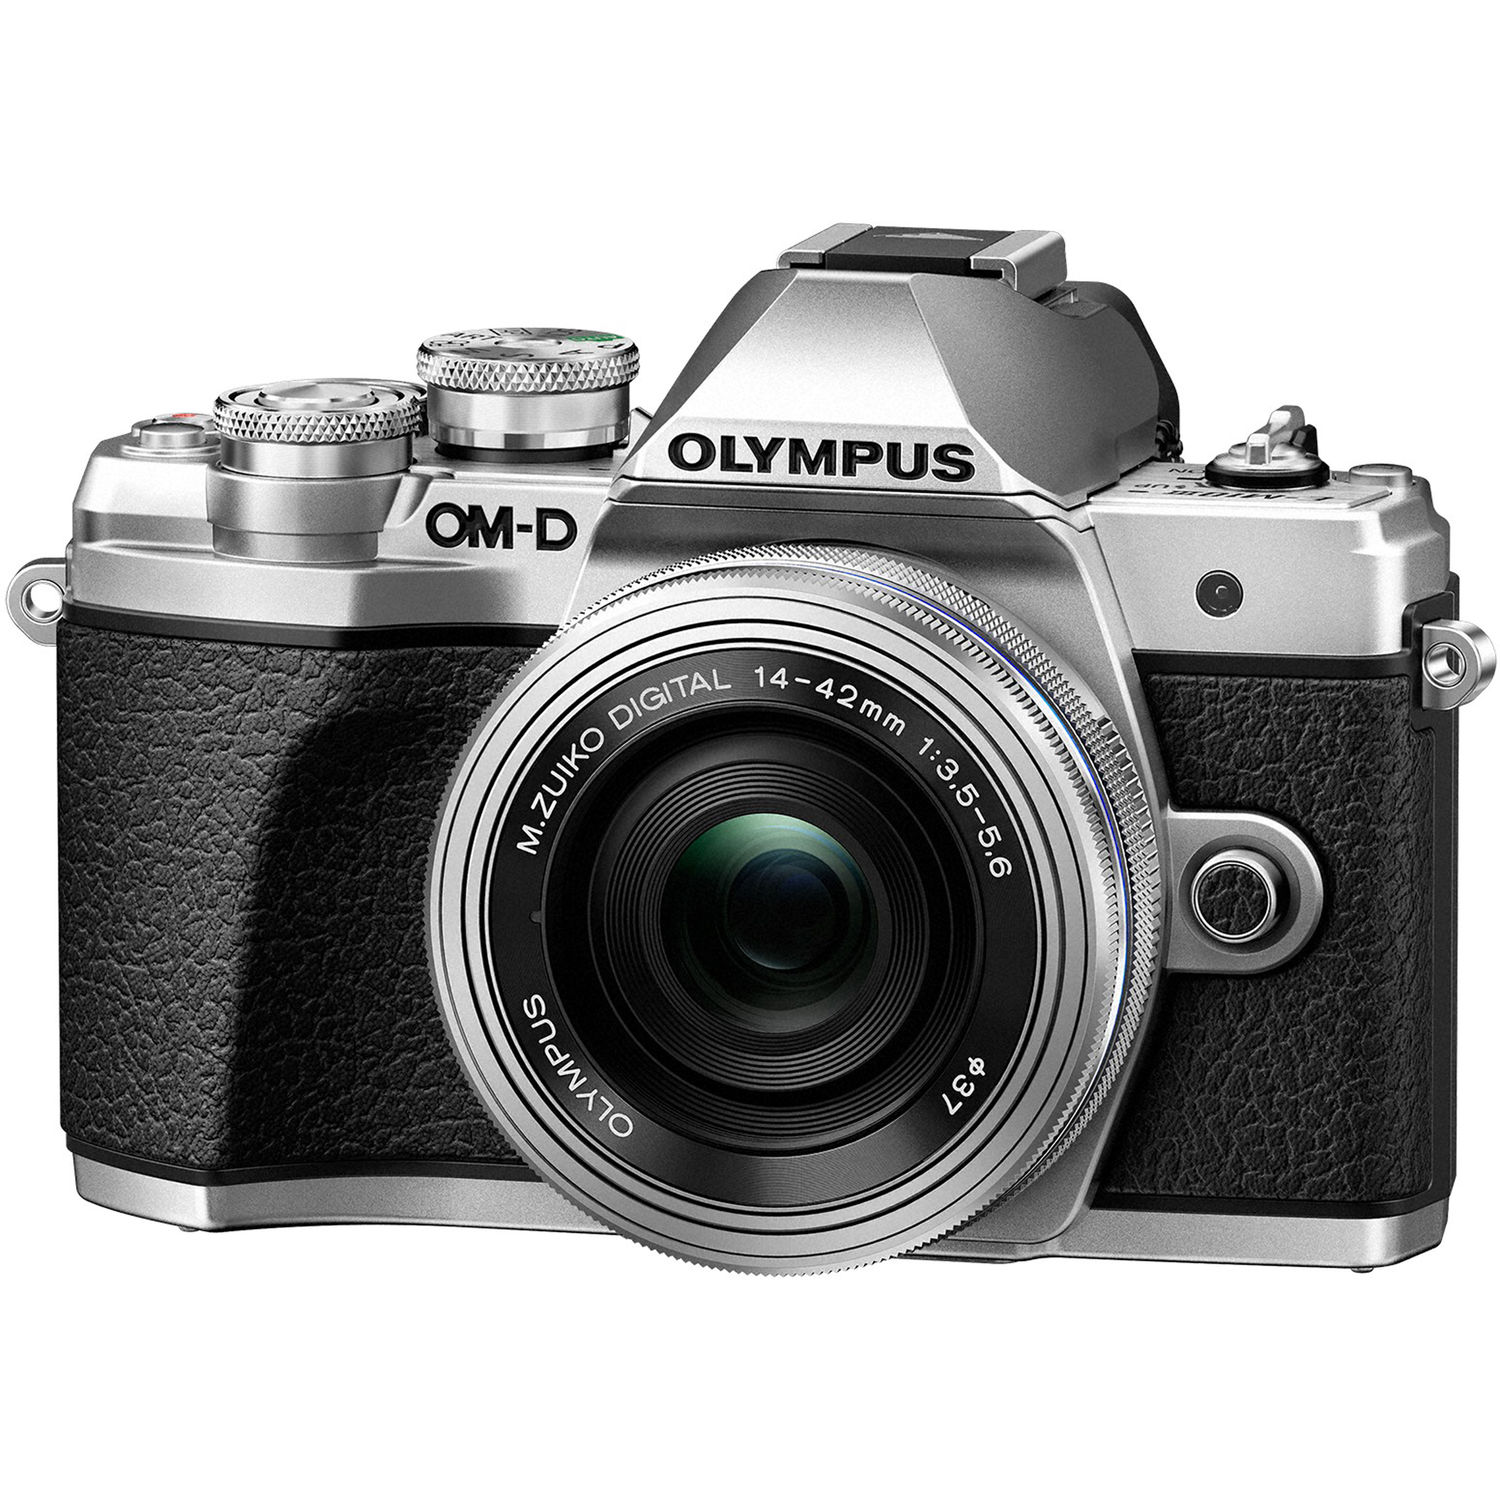 Olympus OM-D E-M10 Mark III Mirrorless  Micro Four Thirds Digital Camera with 14-42mm EZ Lens - Silver